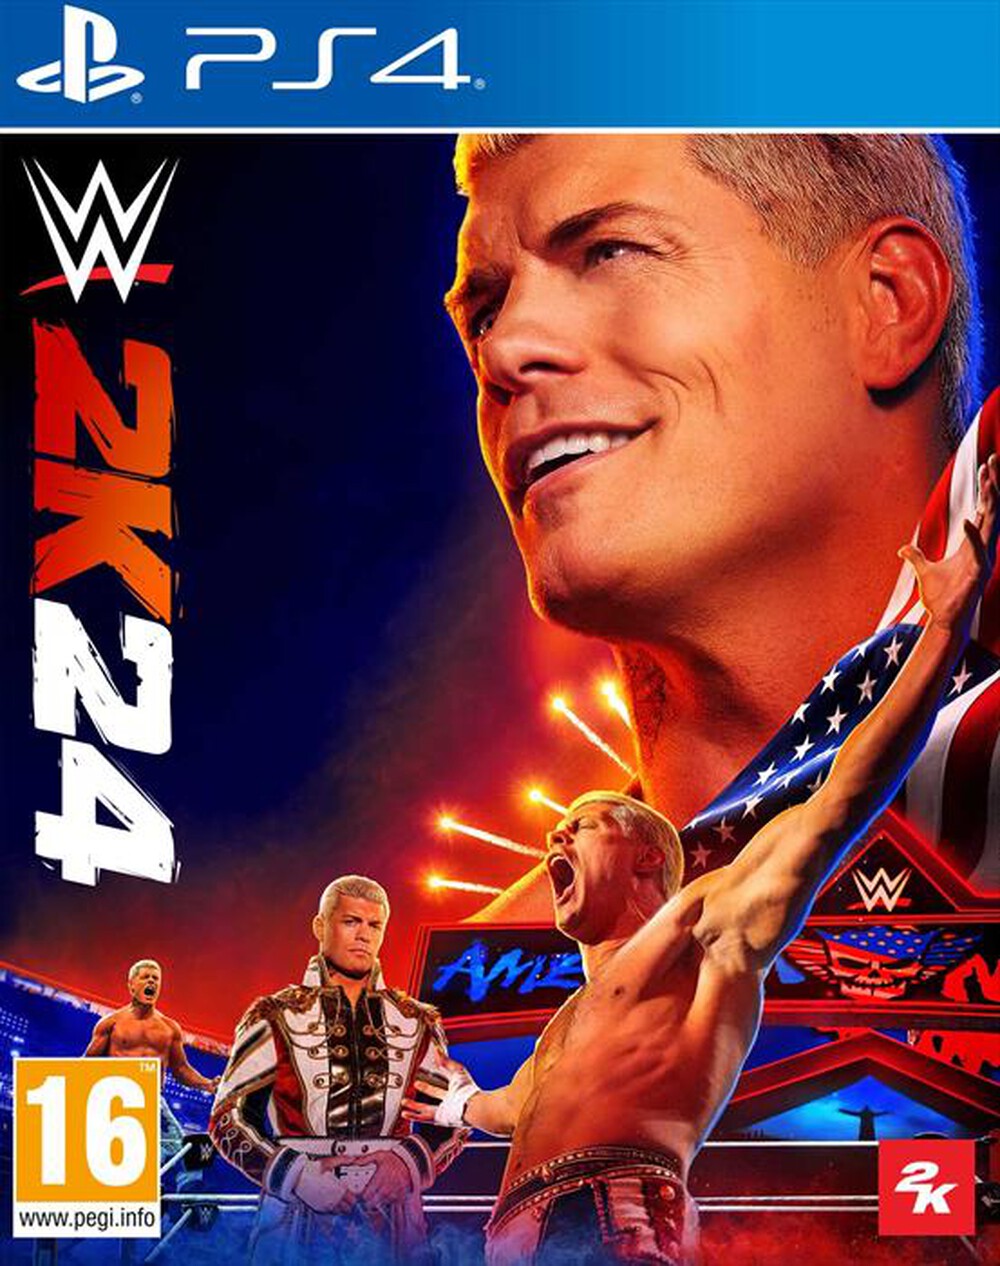 "2K GAMES - WWE 2K24 PS4"